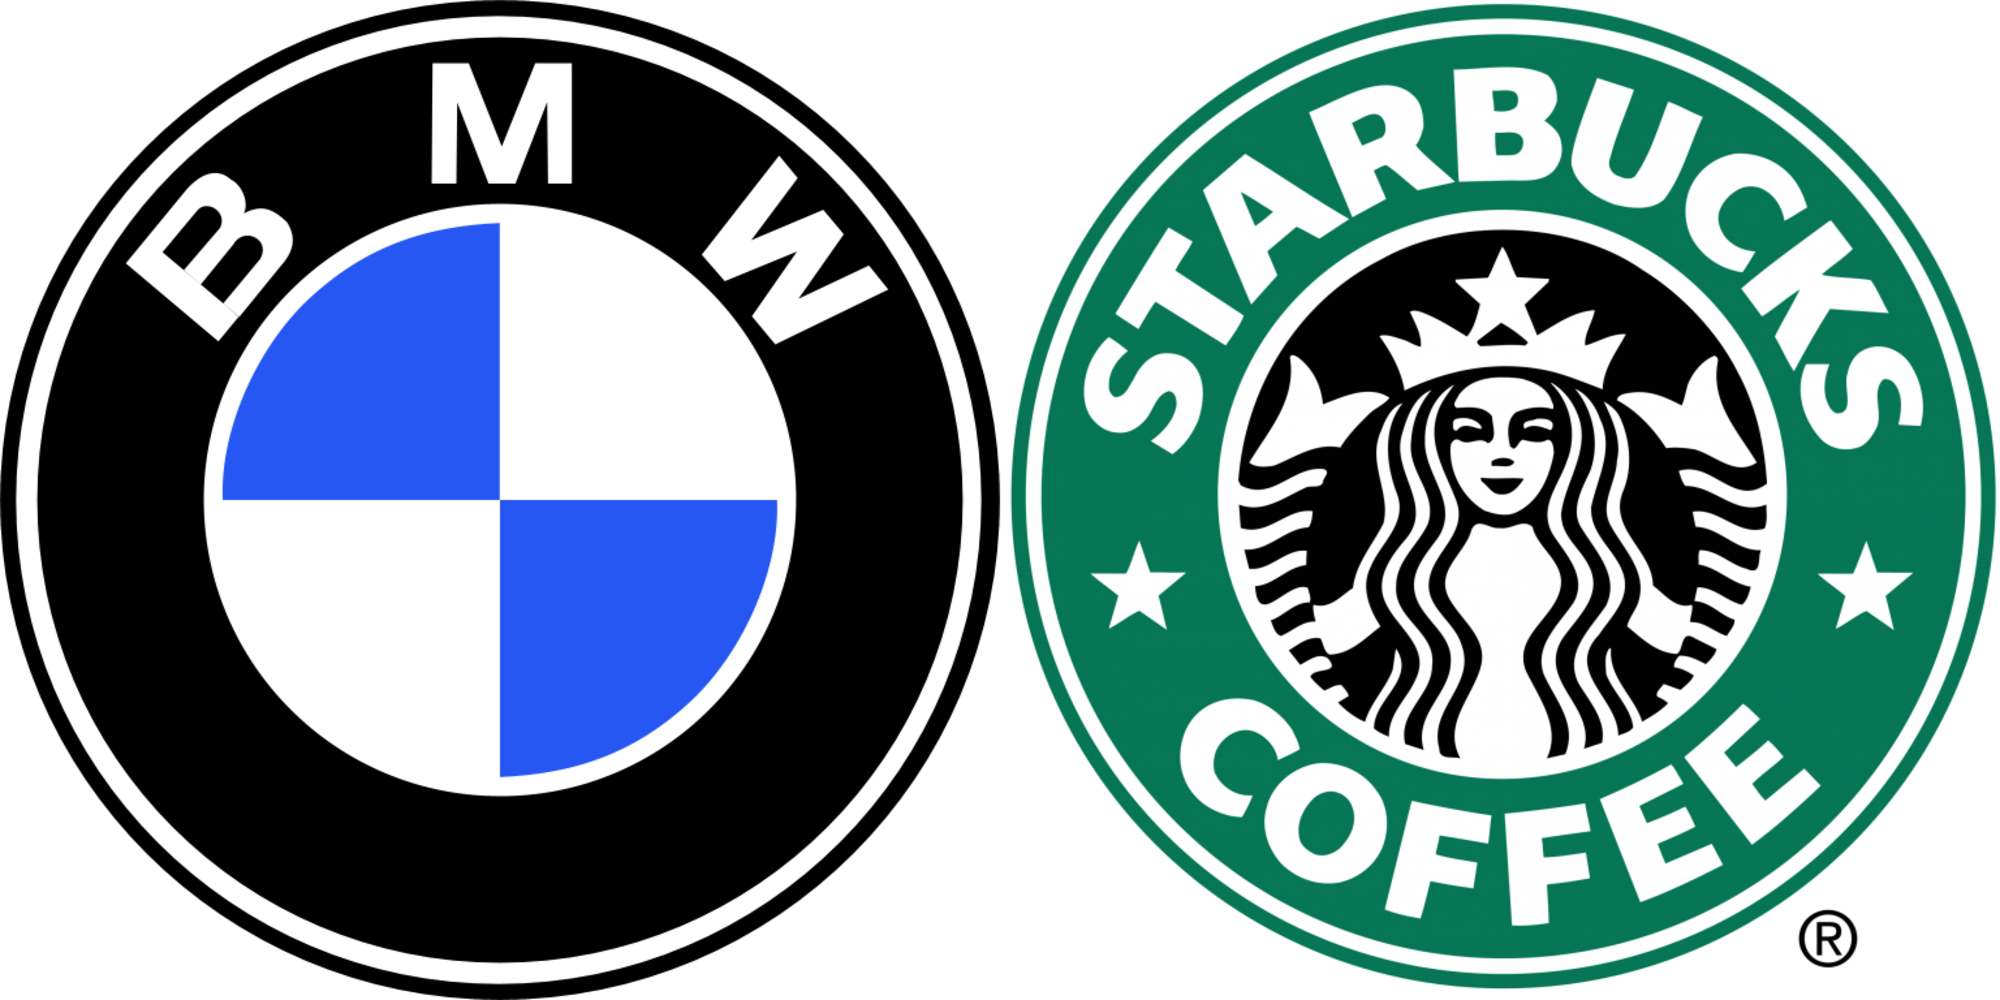 Starbucks coffee shop fridges and BMW Showroom furniture